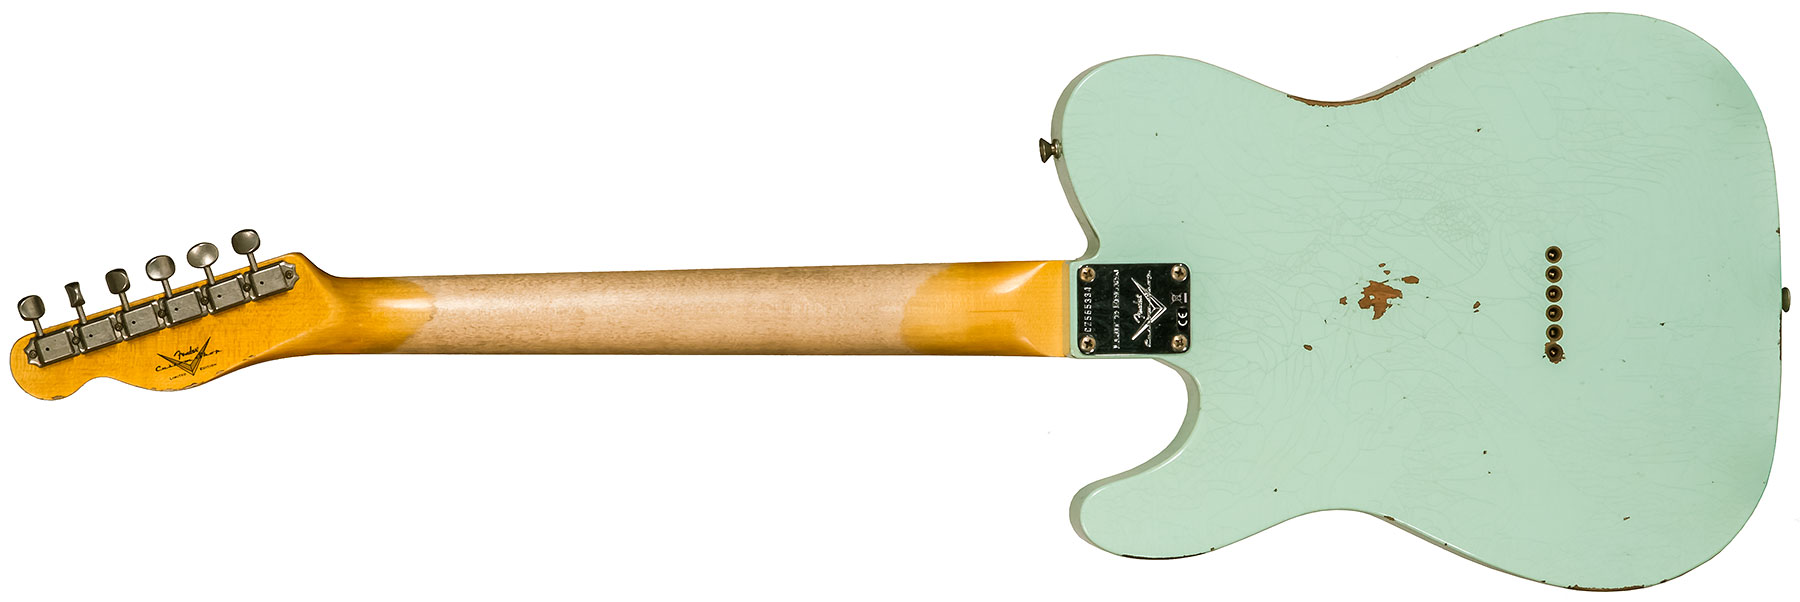 Fender Custom Shop Tele 1961 2s Ht Rw #cz565334 - Relic Faded Surf Green - Tel shape electric guitar - Variation 1